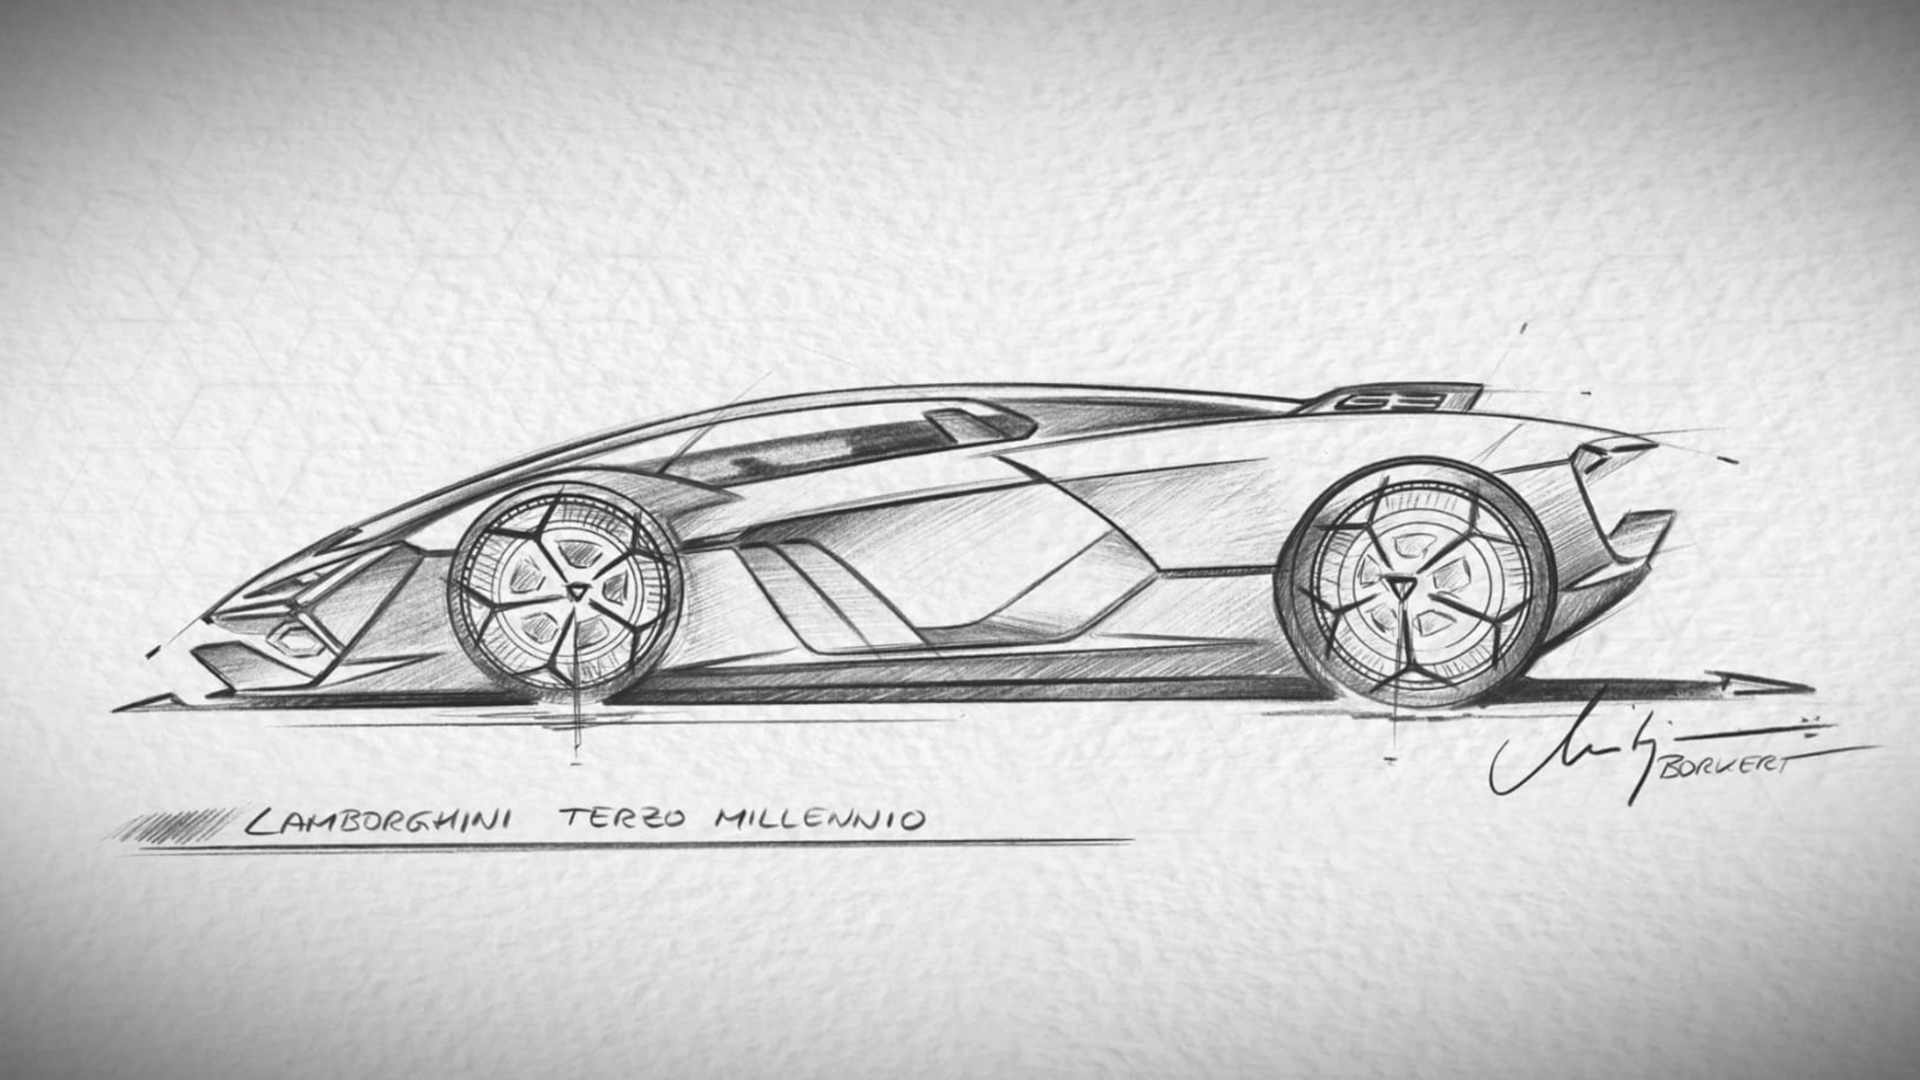 Fiction Art Studio on Twitter How To Draw A Car  Drawing Lamborghini  Car  Drawing httpstcohp5nmJOJTG via YouTube httpstcoe3bpNWBeVD   Twitter